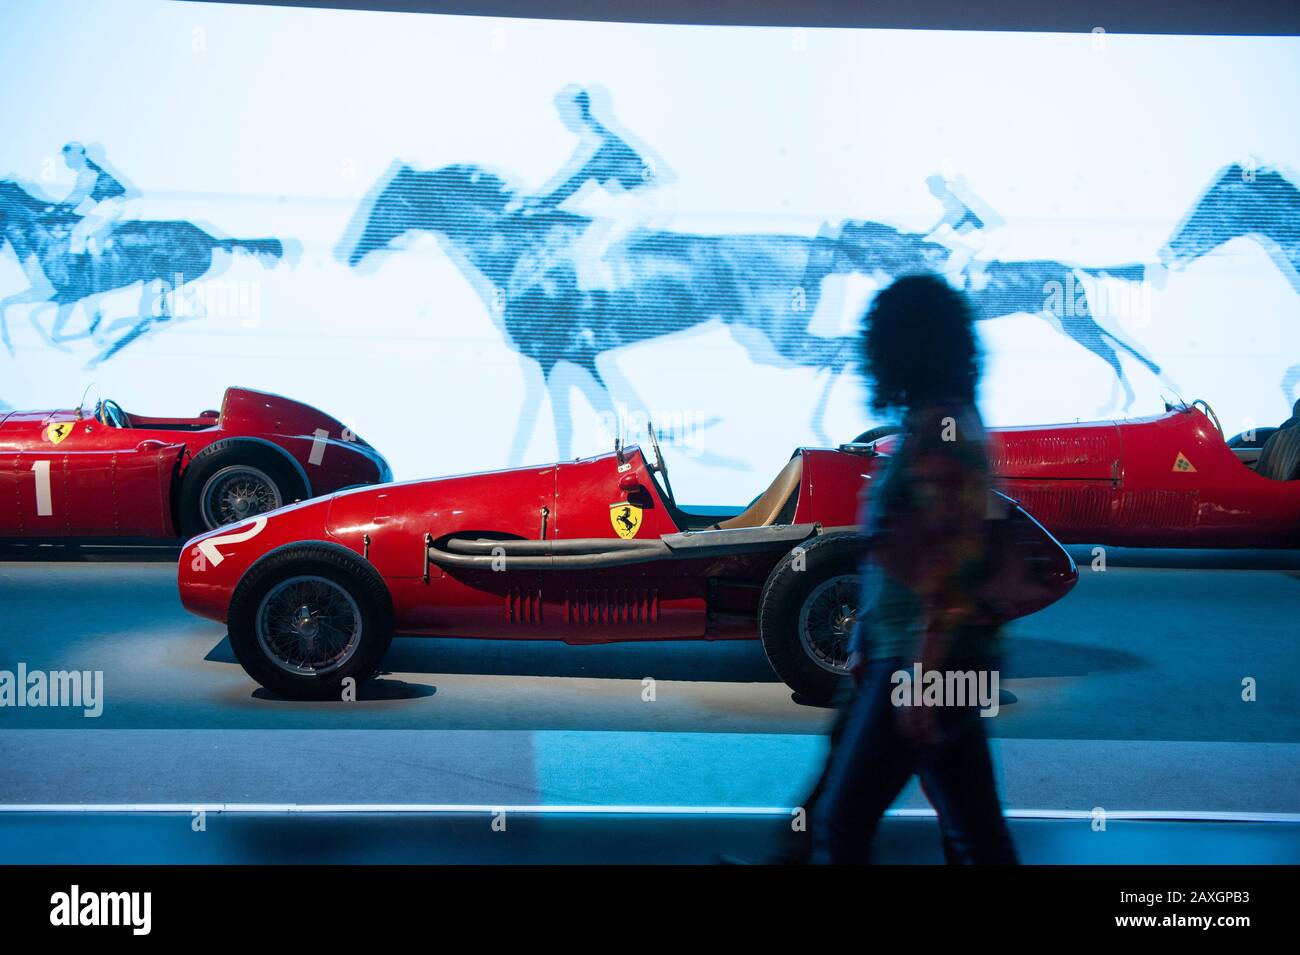 TURIN, ITALY - The Italian Museum of Automobile. The Ferrari 500 F2 manufactured in 1952. Stock Photo